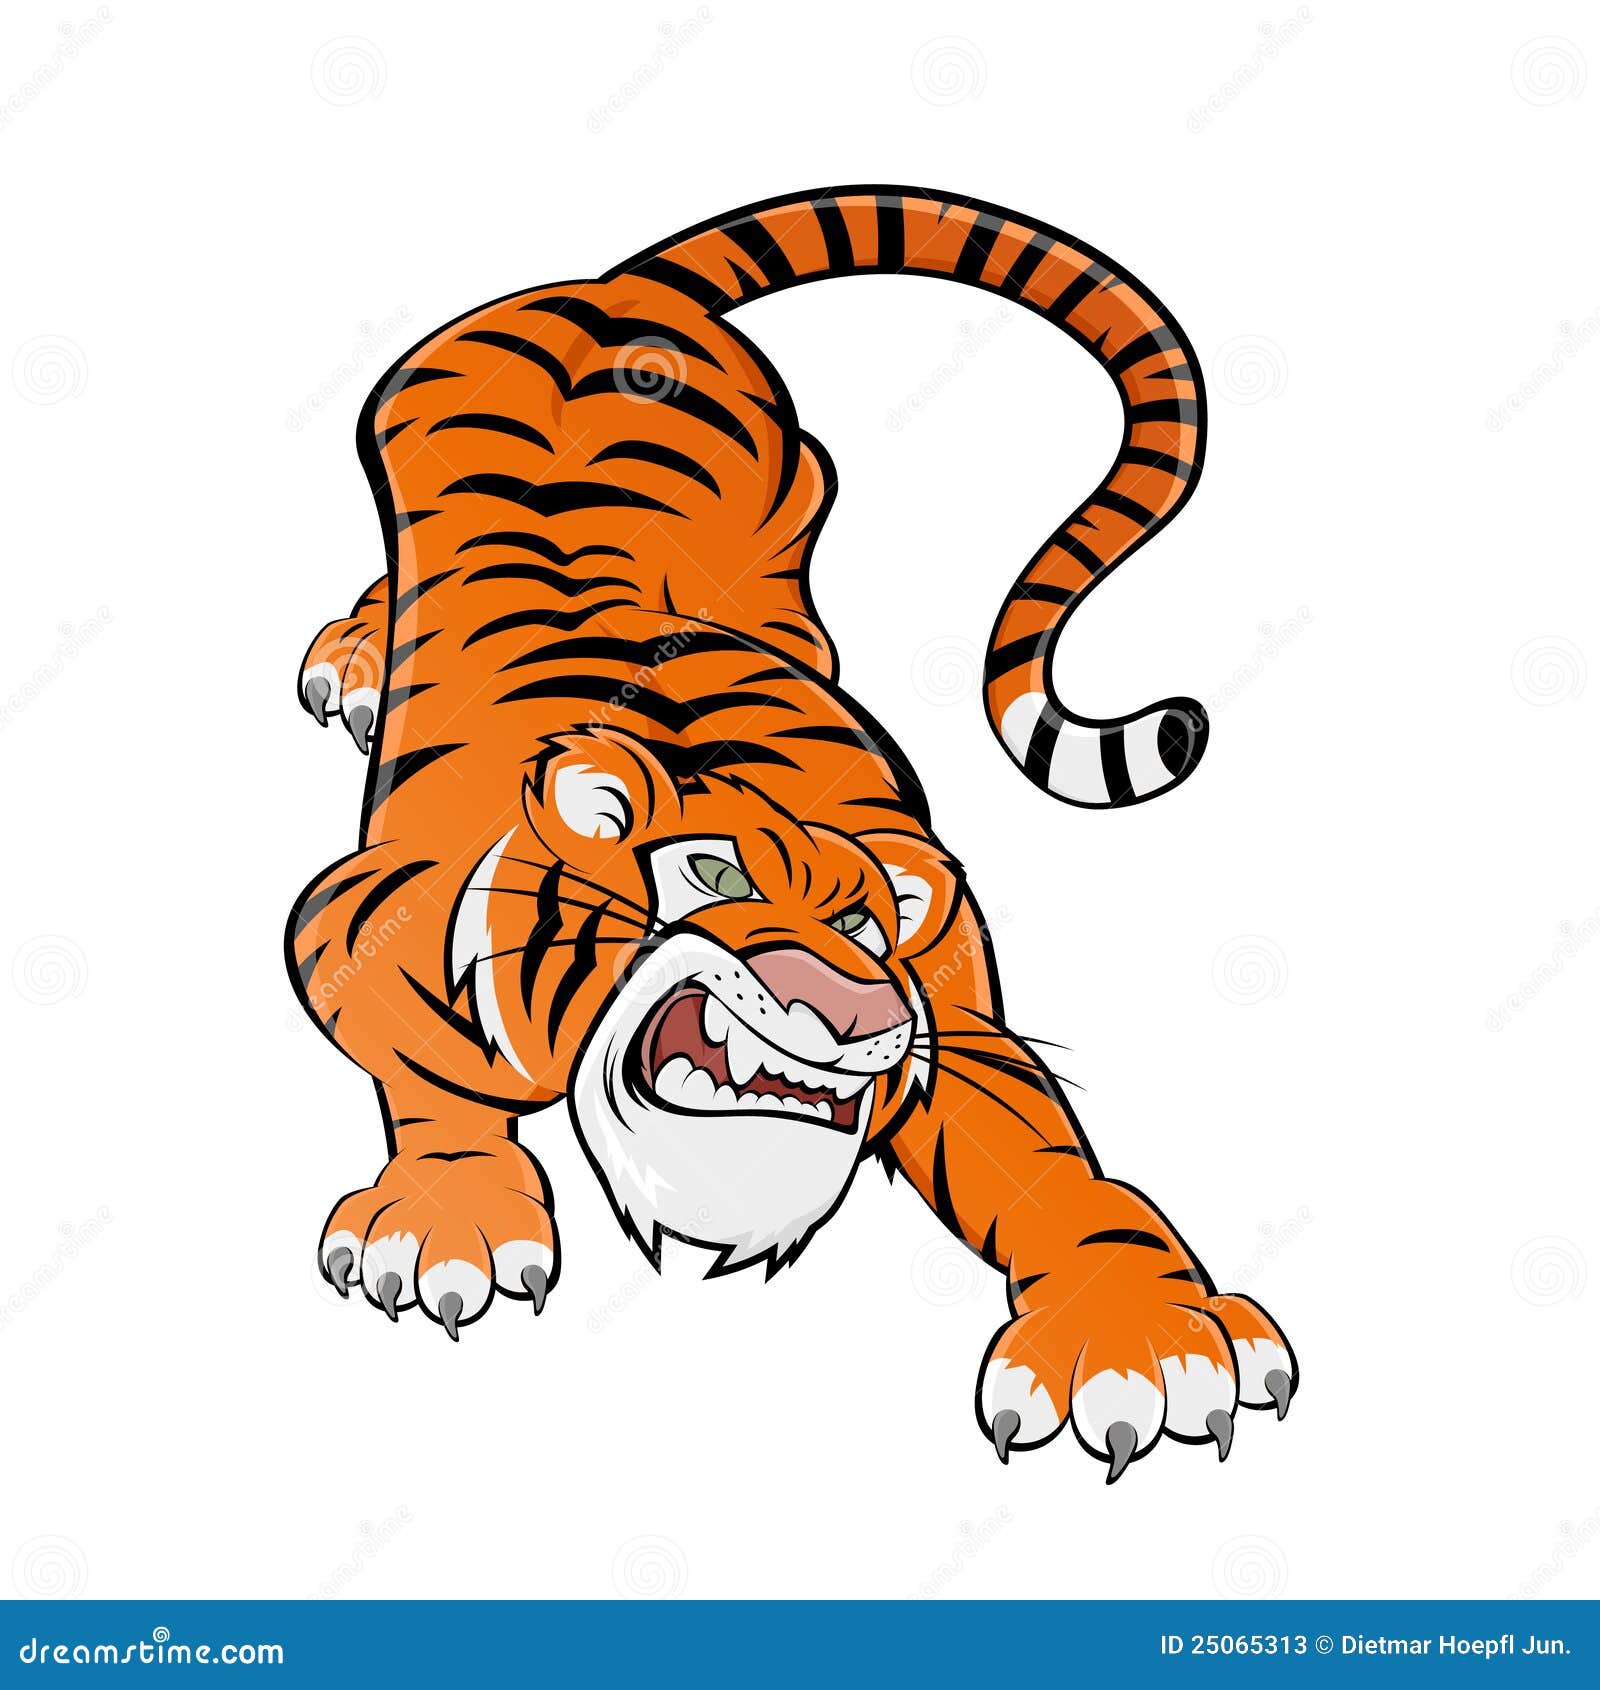 tiger cartoon images